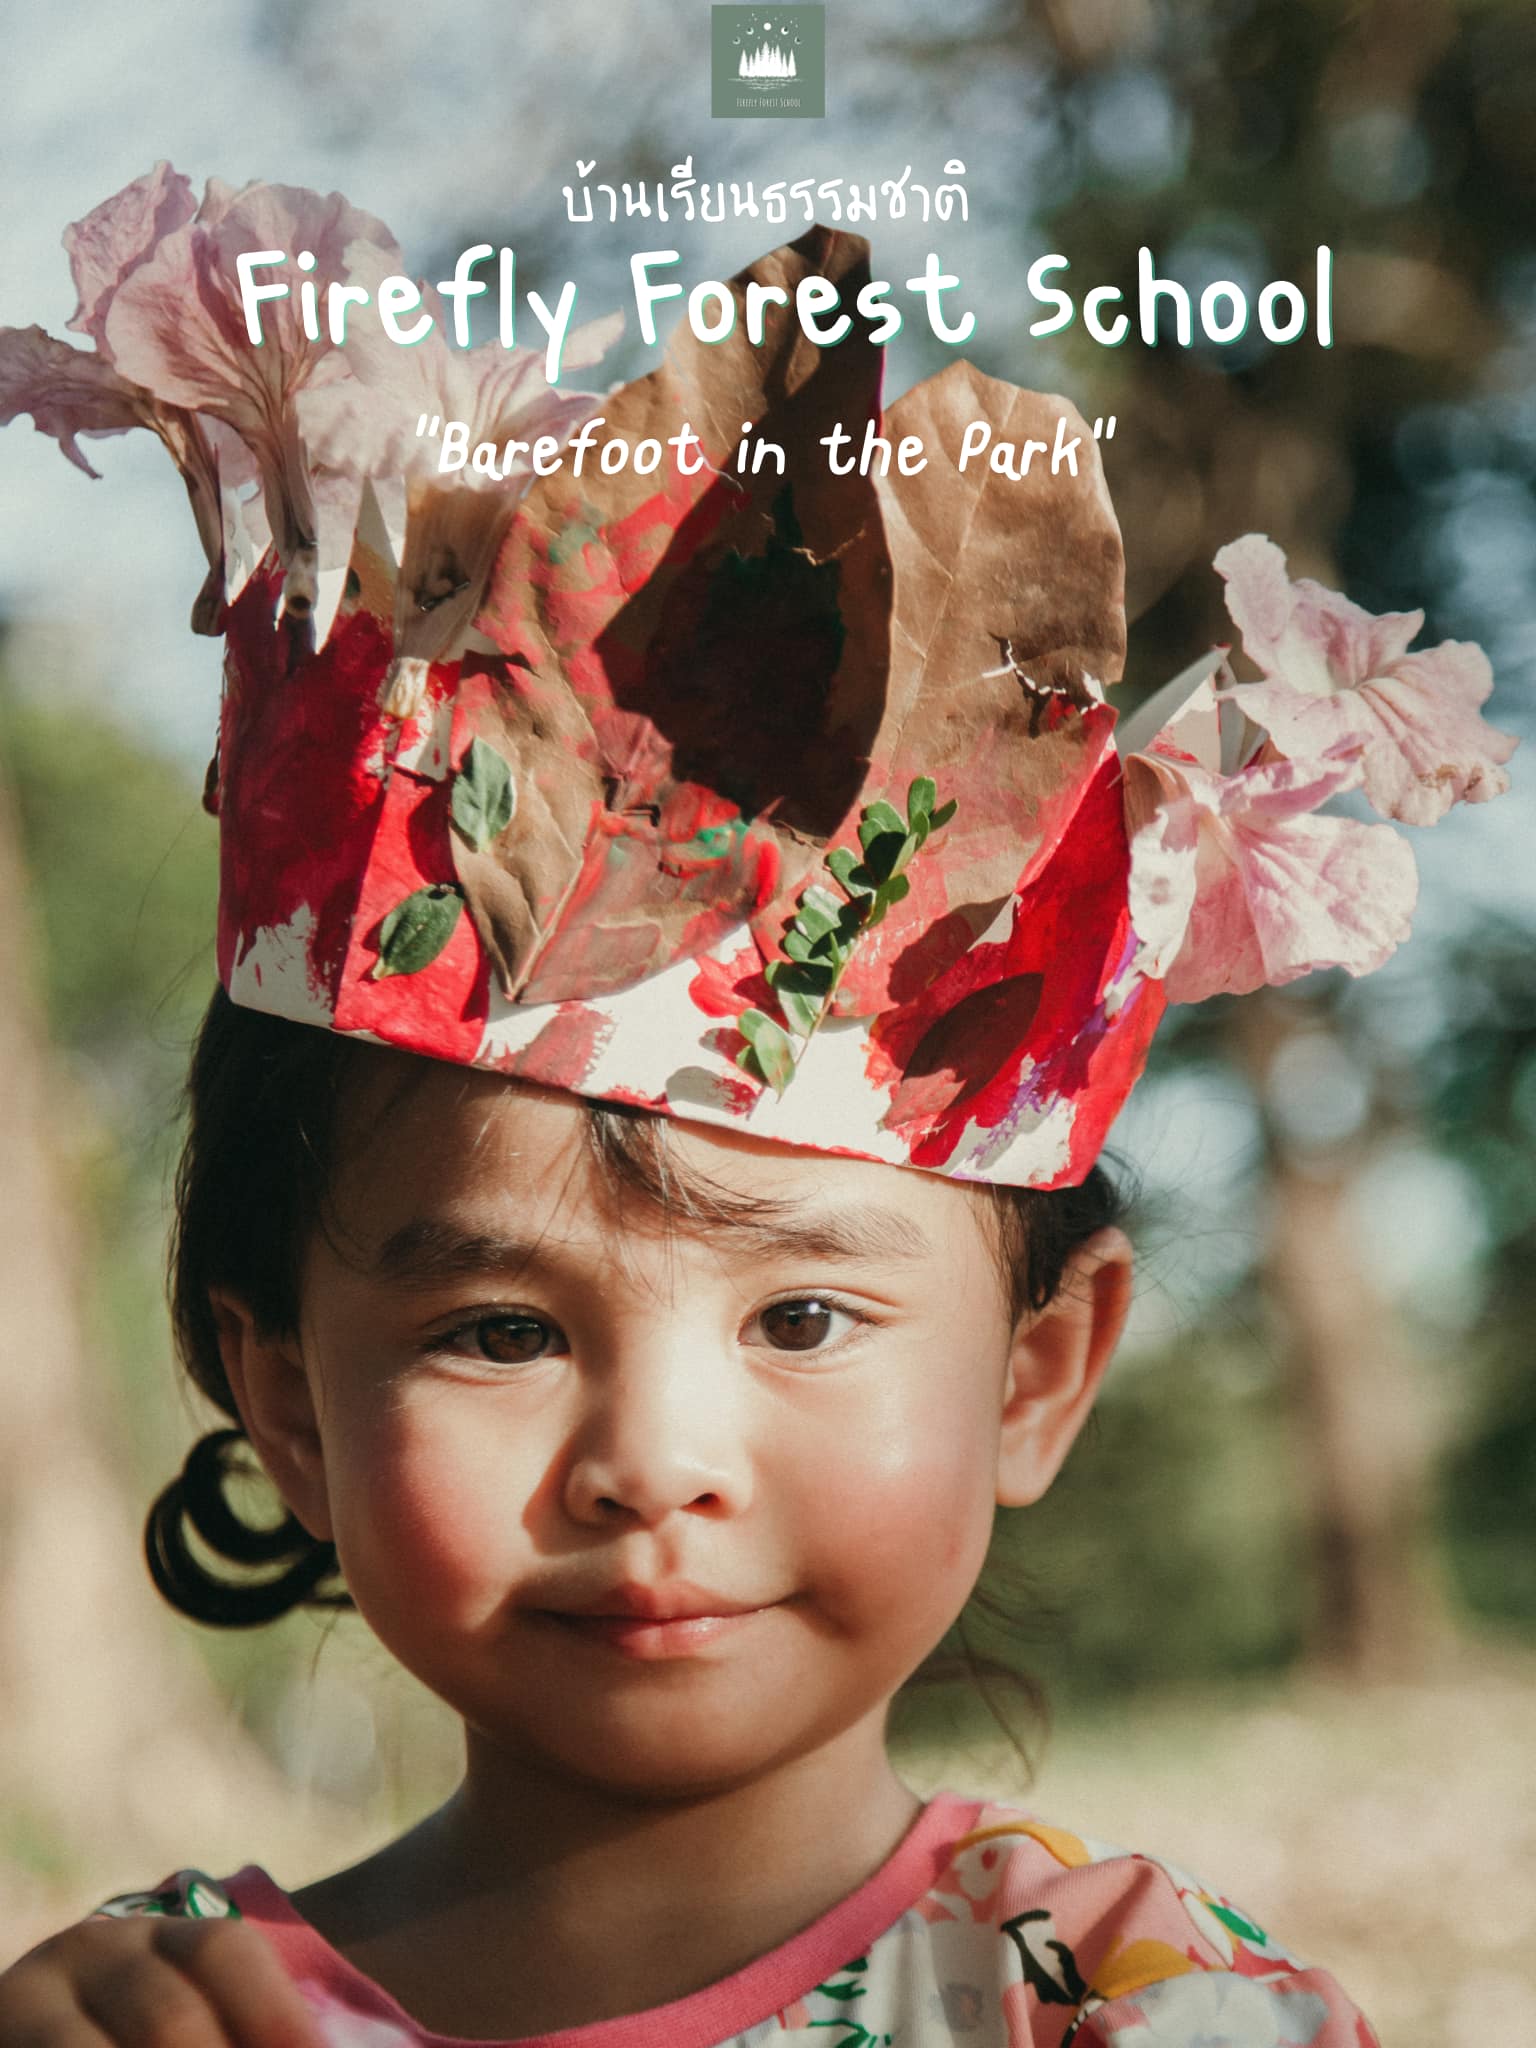 Barefoot_in_the_park_Firefly-Forest-School_โรงเรียนธรรมชาติ_โรงเรียนนหิ่งห้อย_1